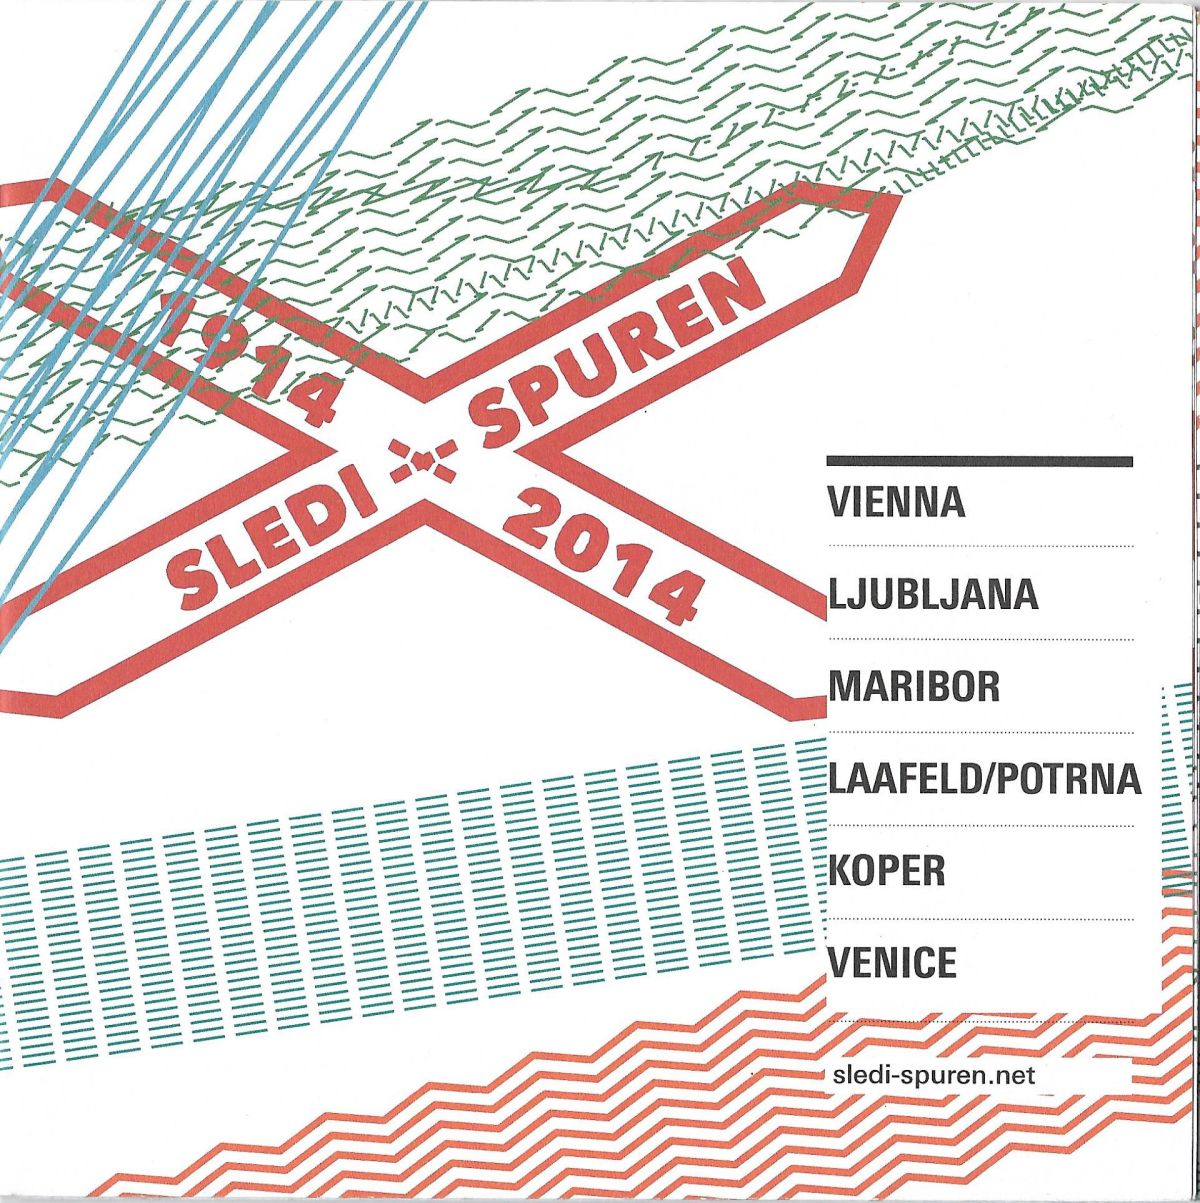 SLEDI-SPUREN, traveling exhibition, April to December 2014.